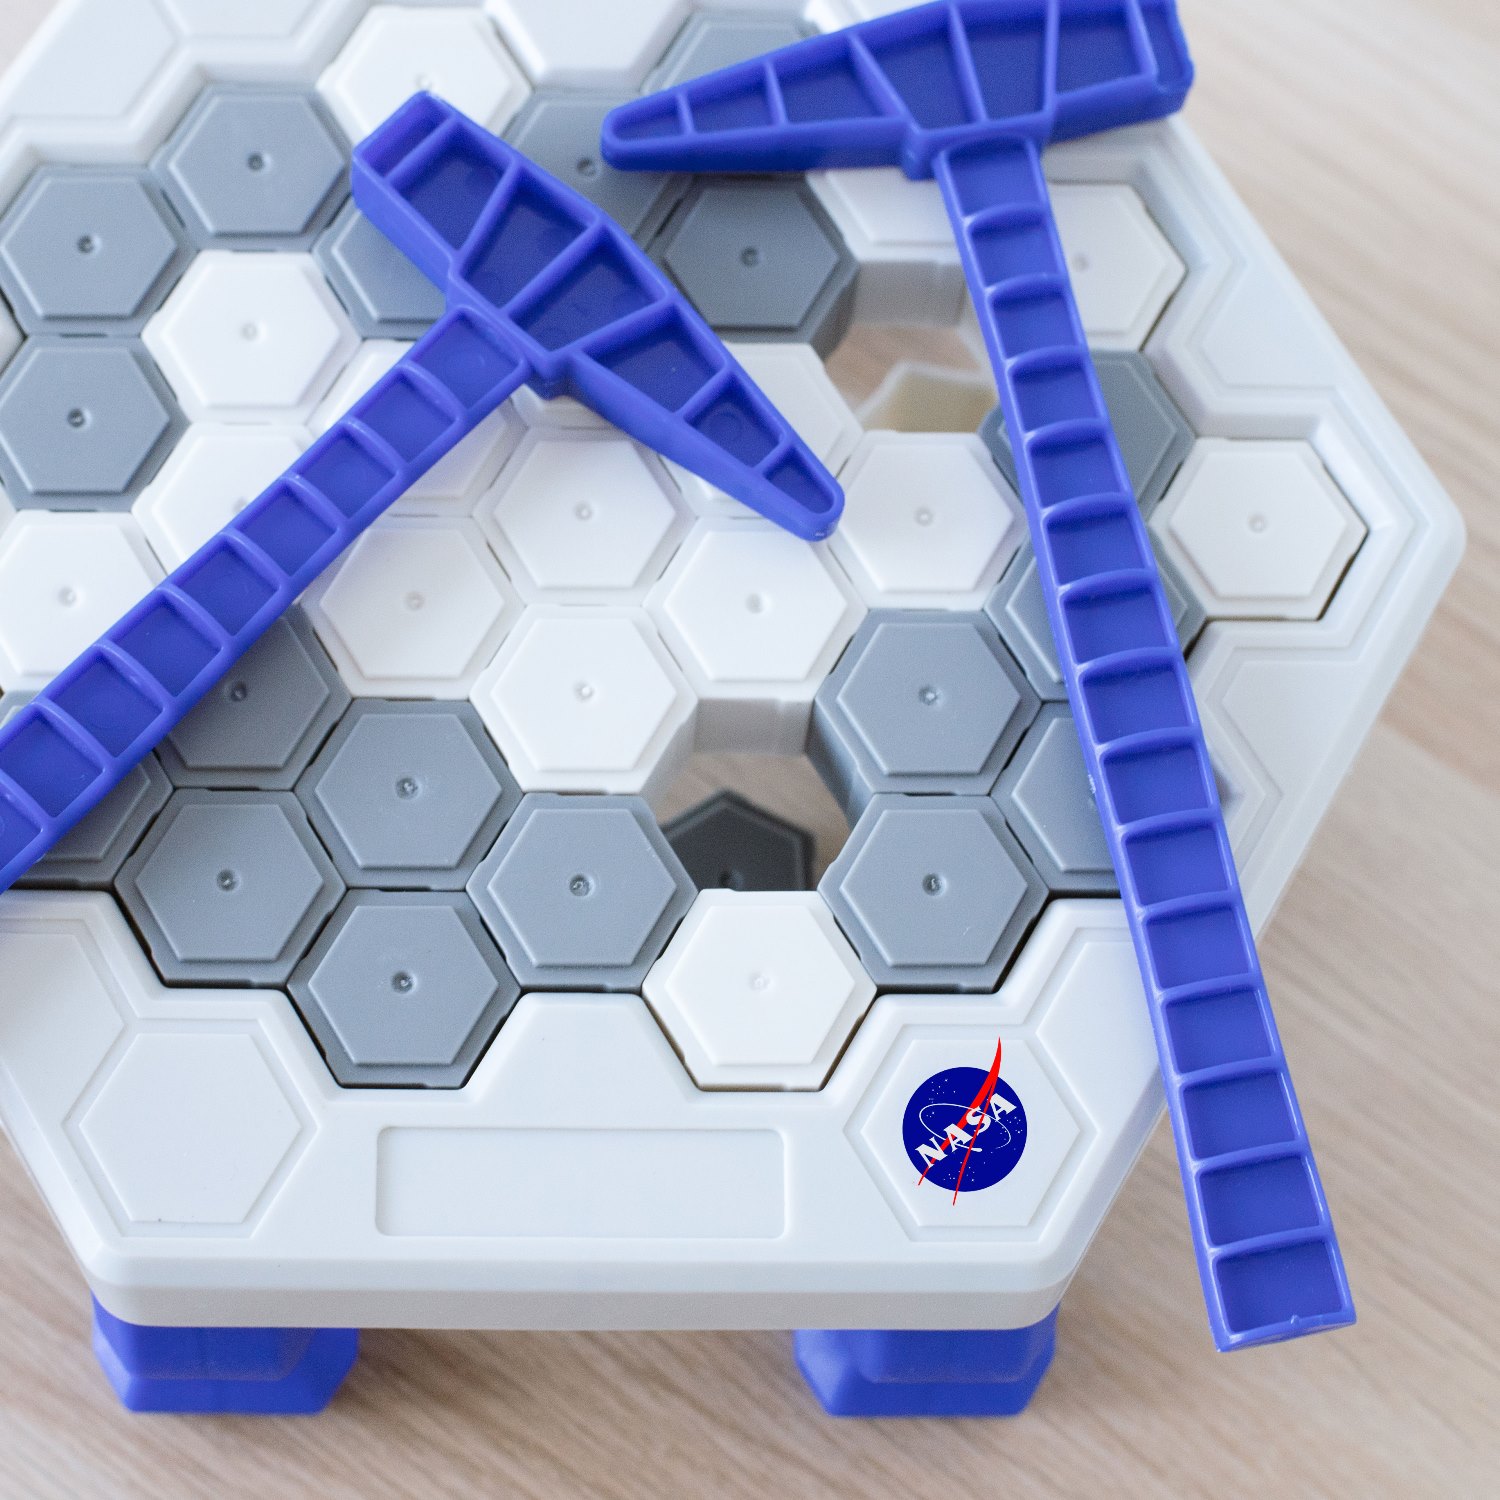 NASA Strategiespiel "Moon Miner" Game